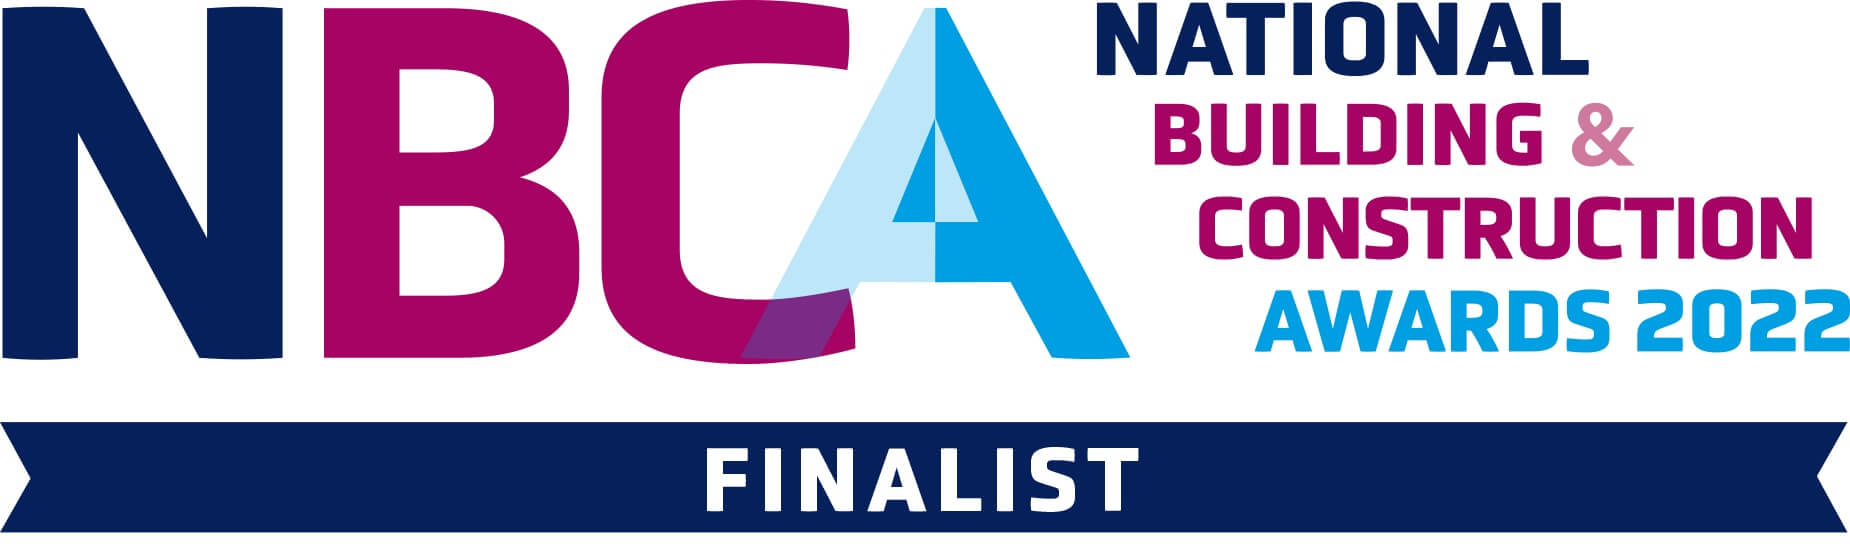 NBCA Logo 2022 Finalist - Finalists National Building & Construction Awards